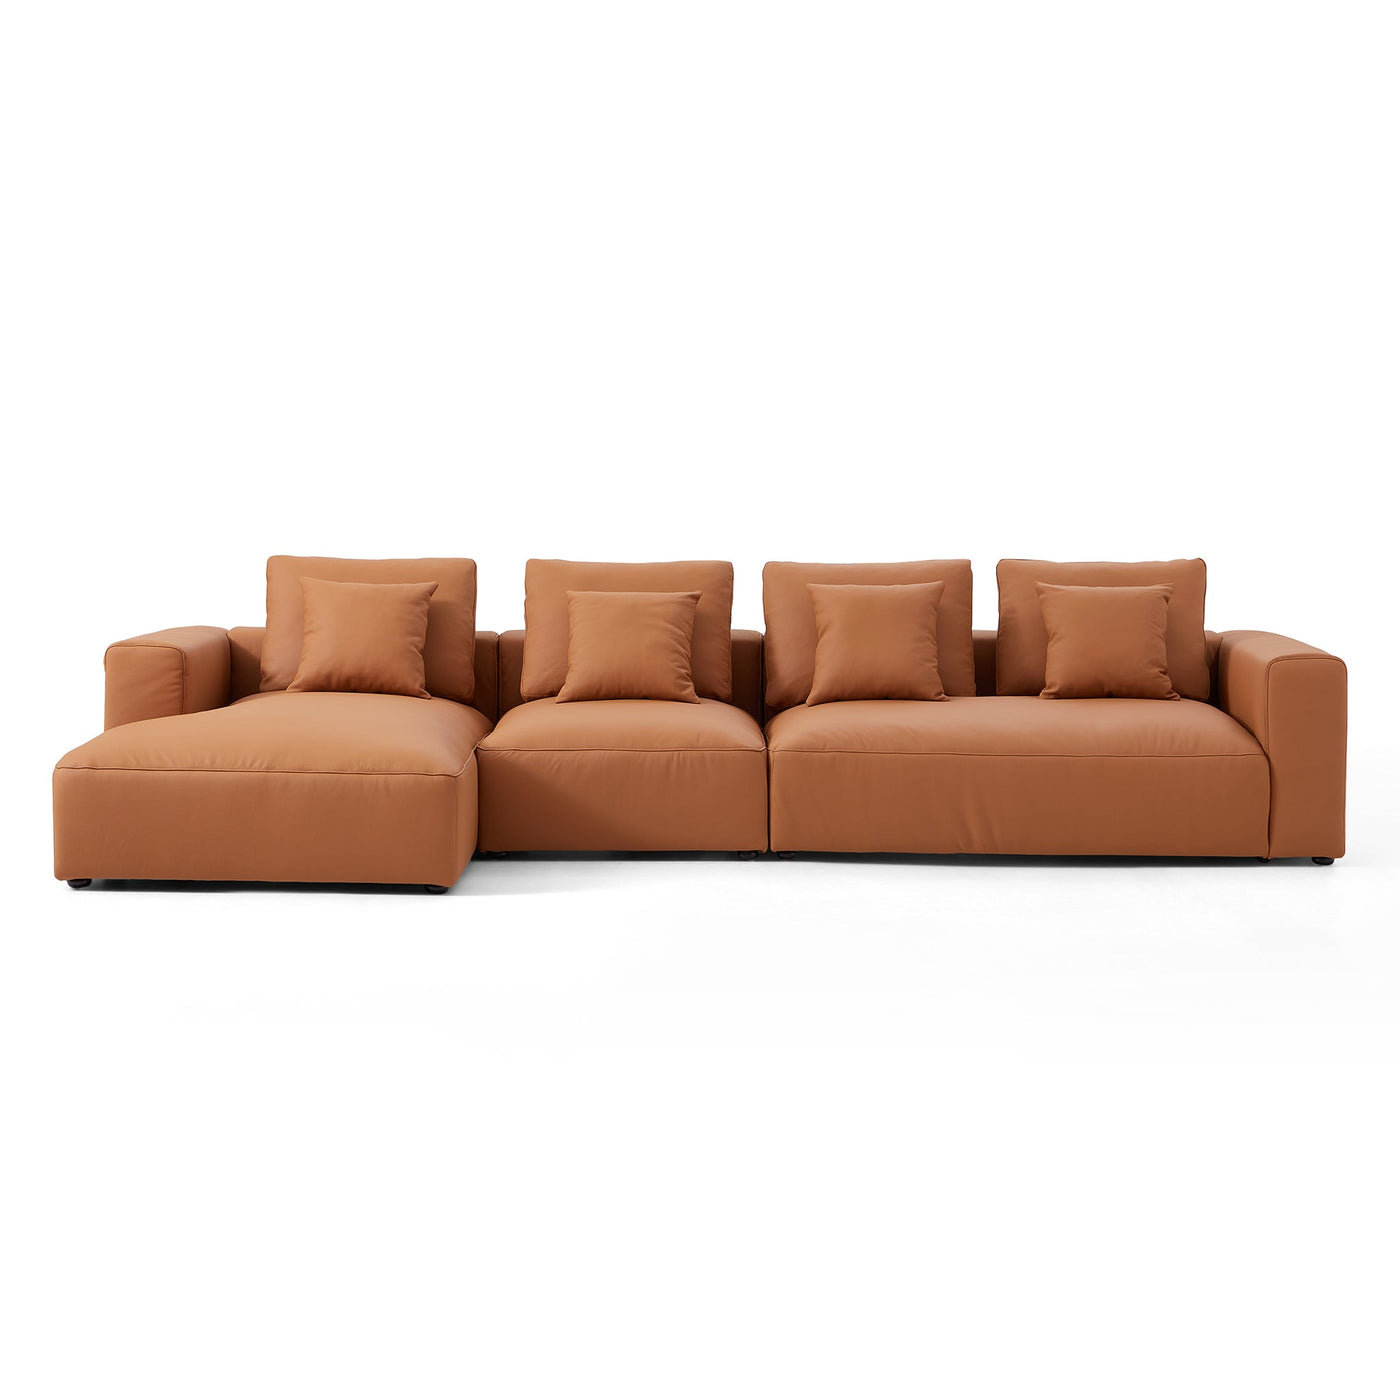 Nathan Modular Orange Leather Sectional Sofa-Orange-151.0"-Facing Left